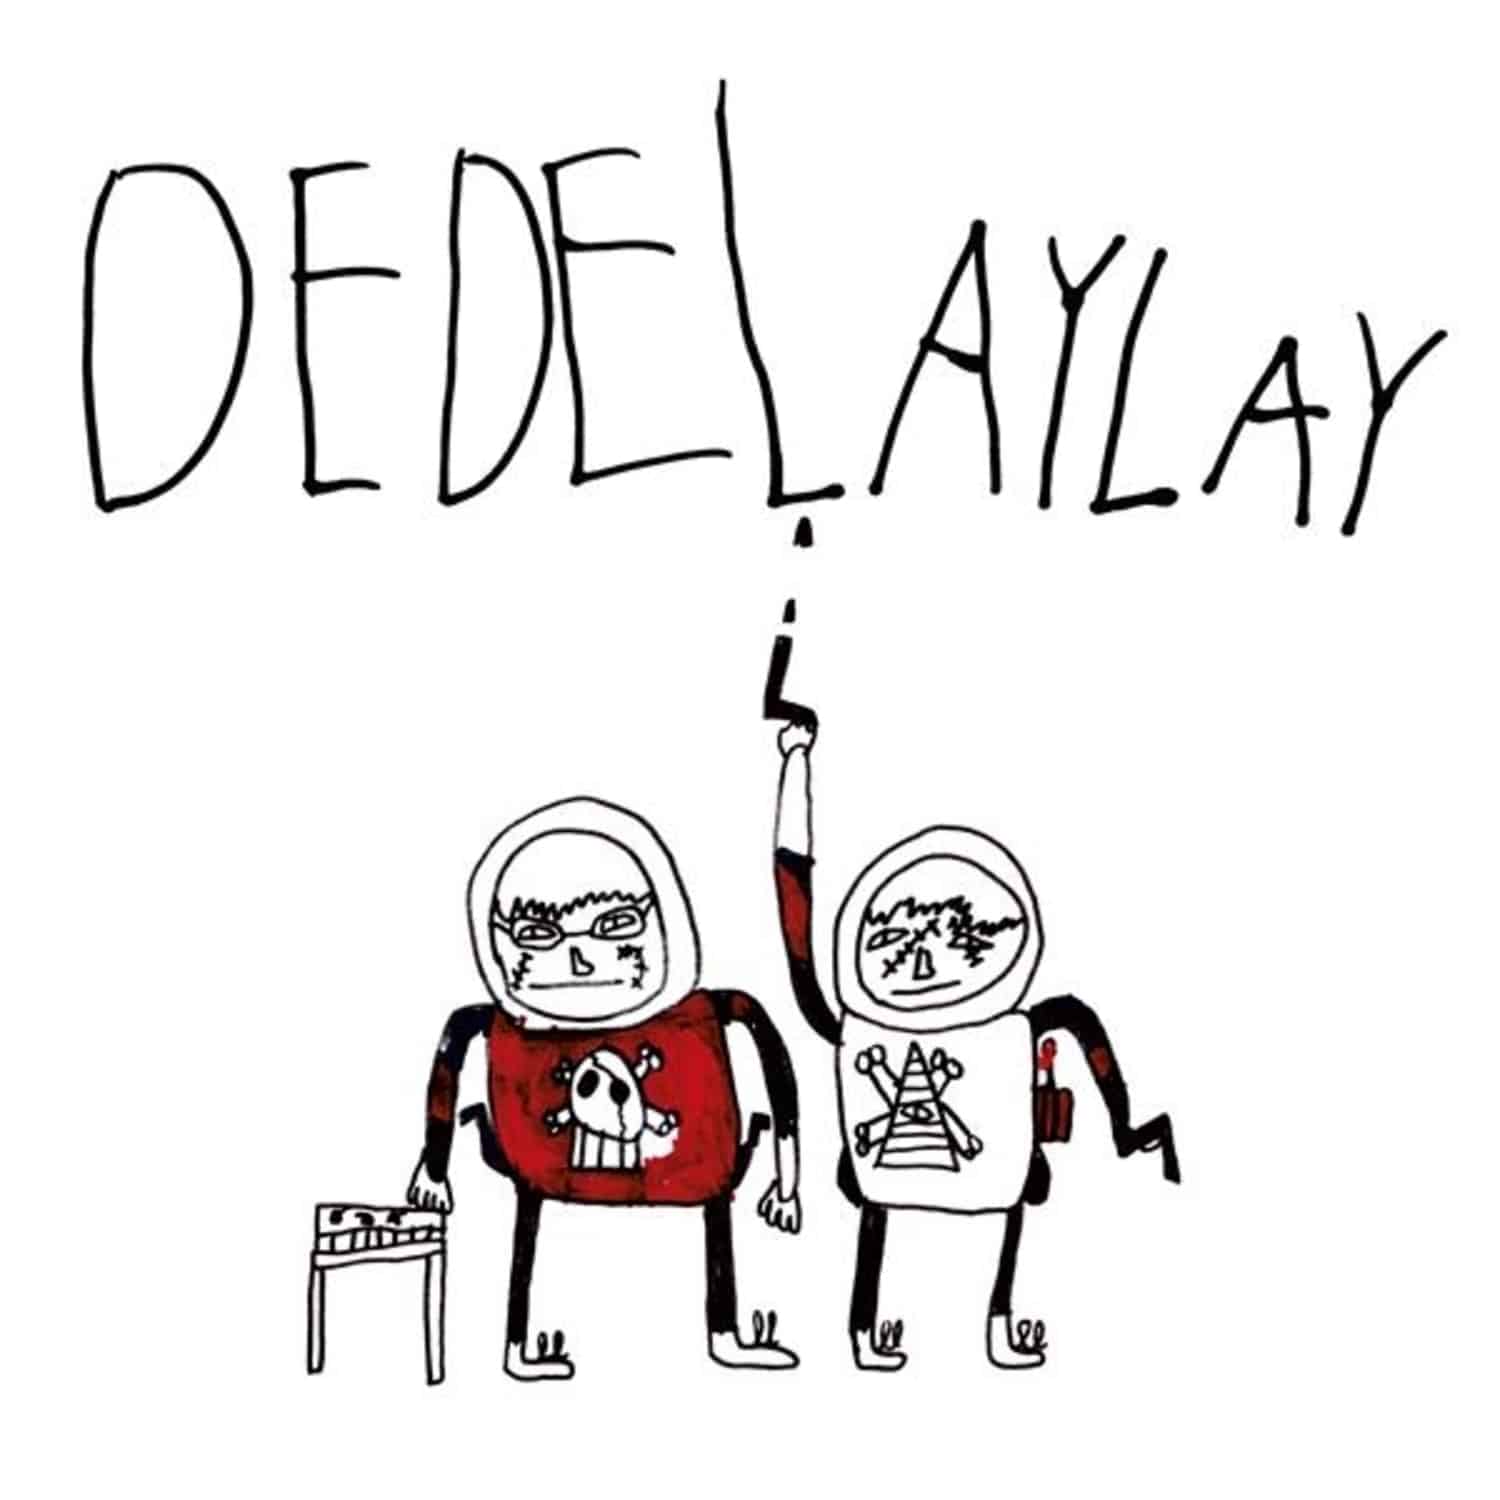 Dedelaylay - DEDELAYLAY 